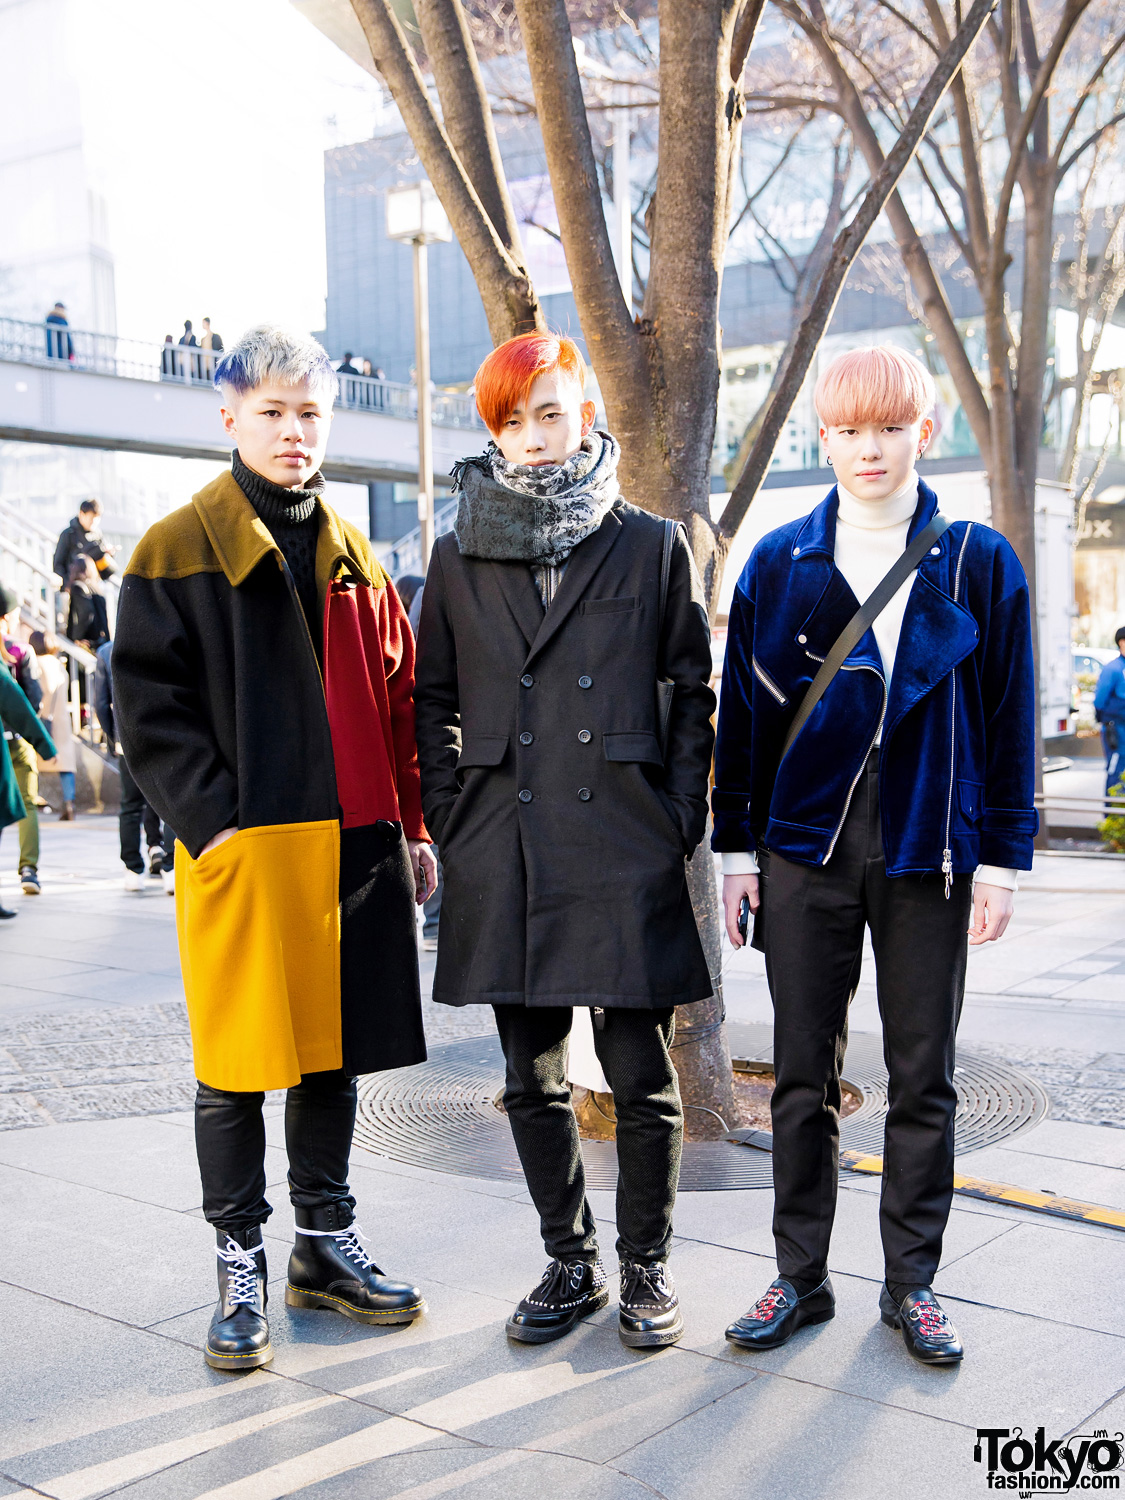 Harajuku Guys' Colorful Hairstyles & Winter Street Fashion w/ Gucci, Zara & Dr. Martens